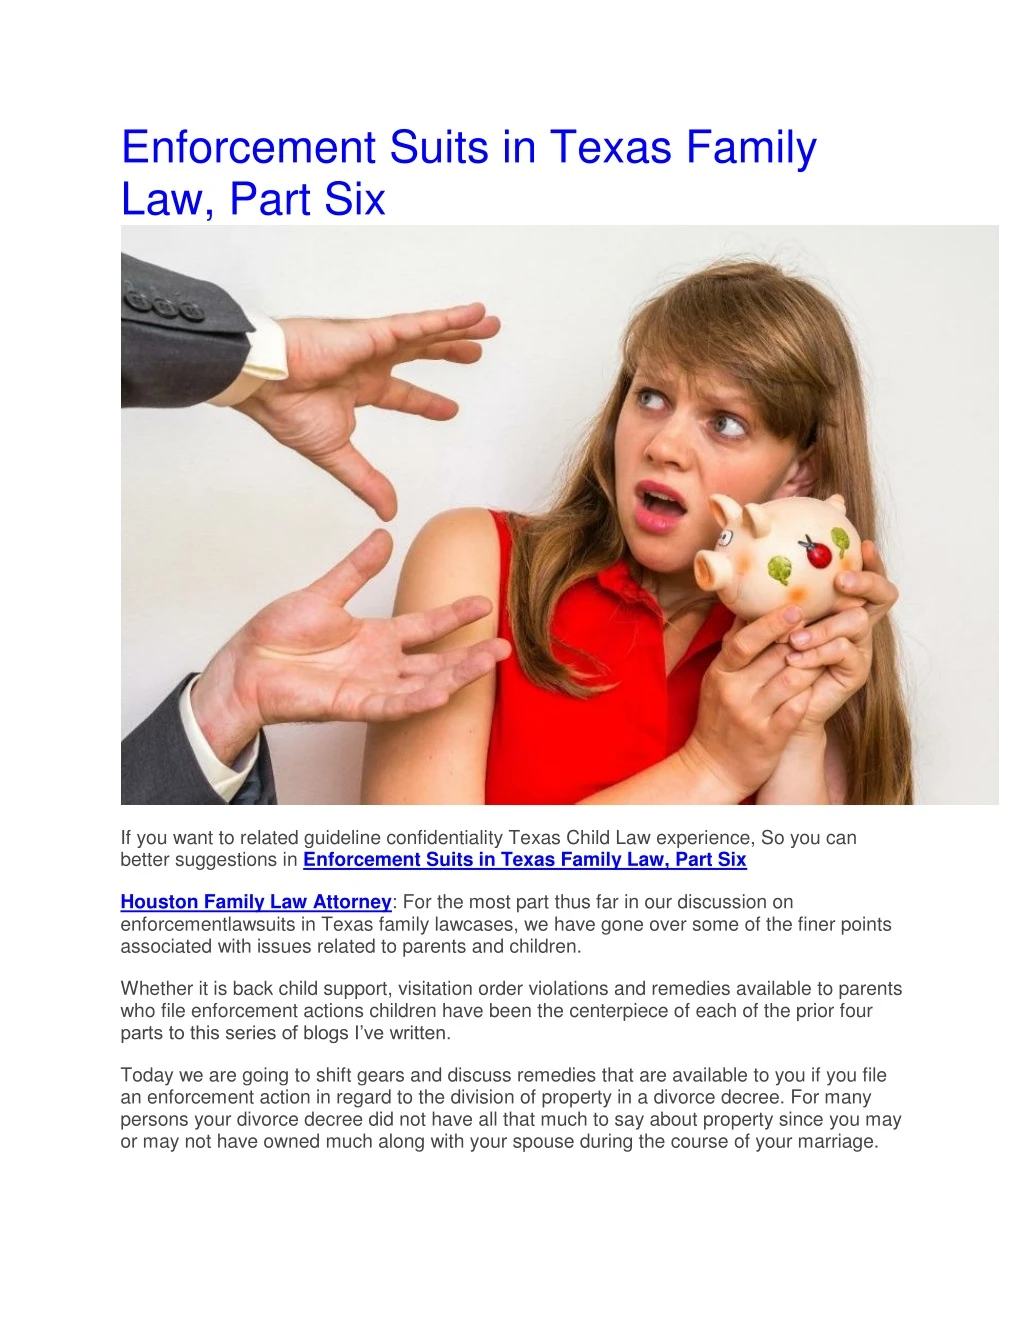 enforcement suits in texas family law part six